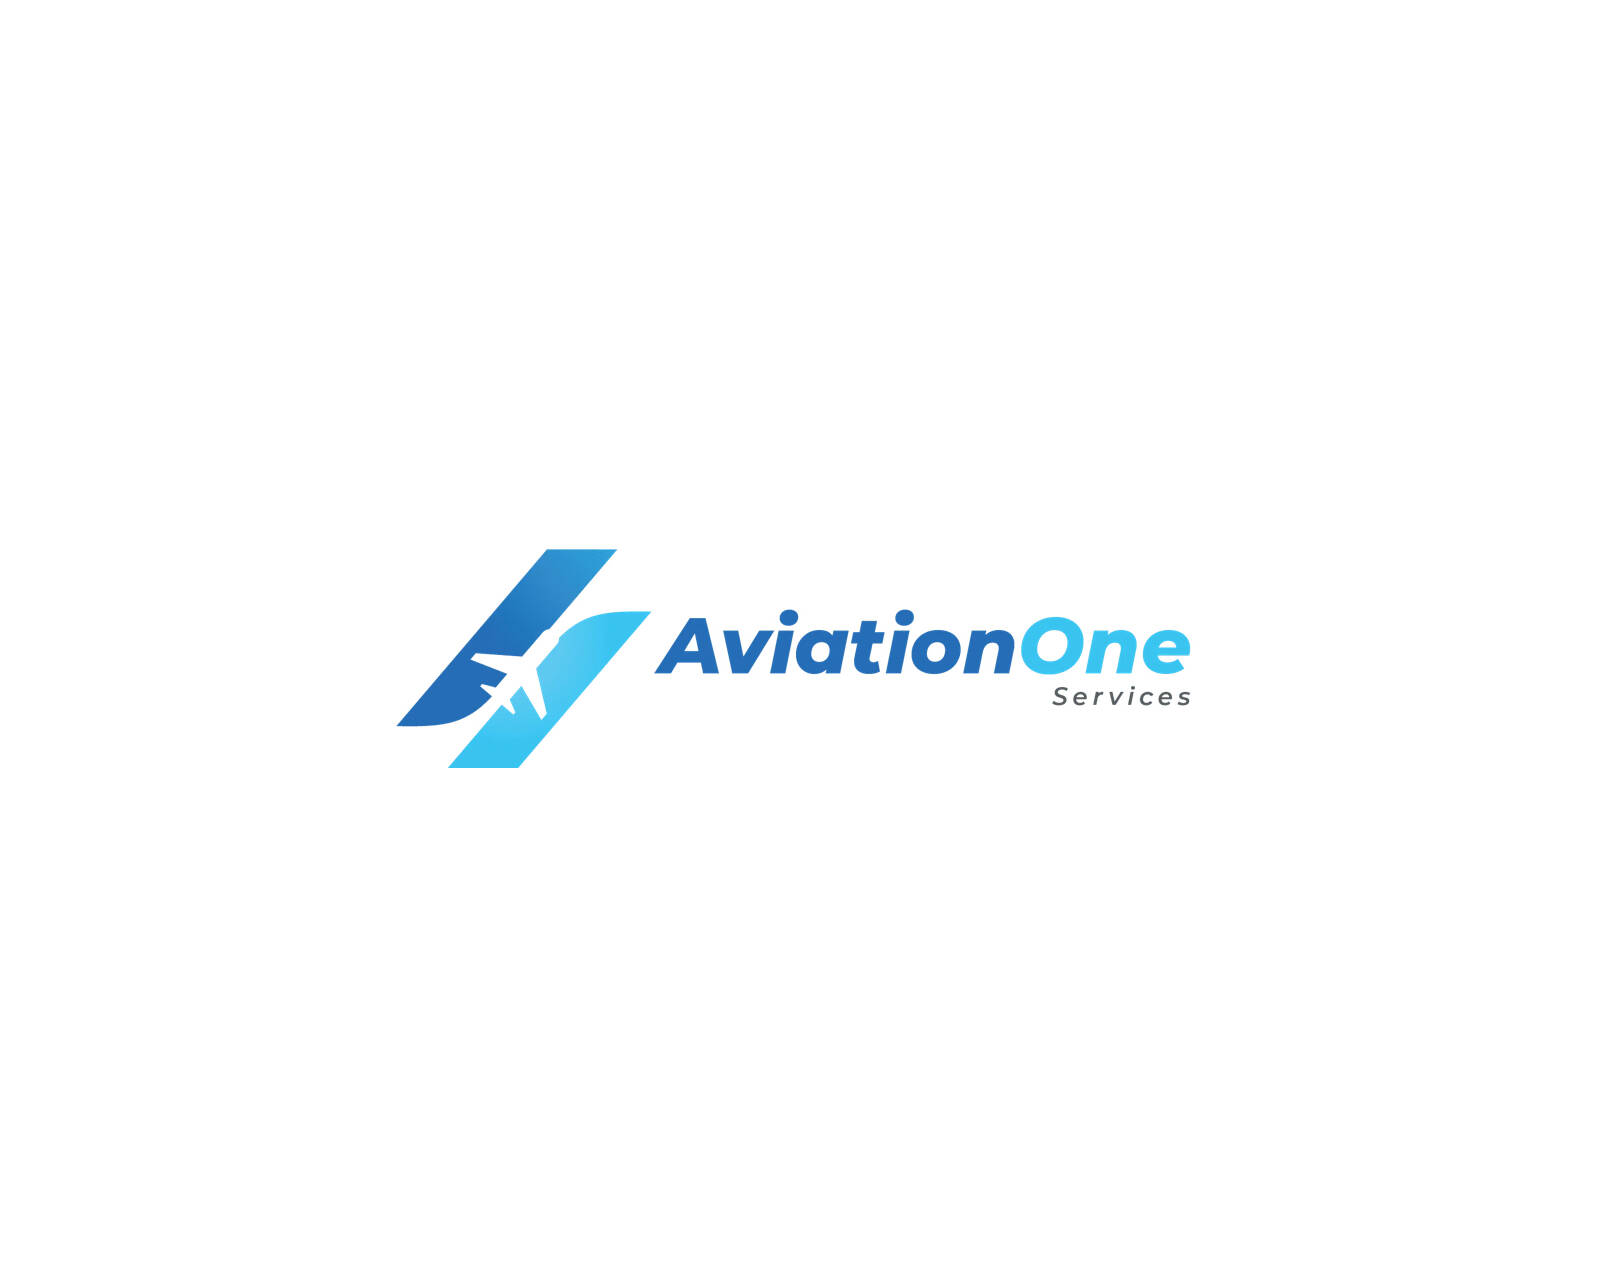 Aviation One